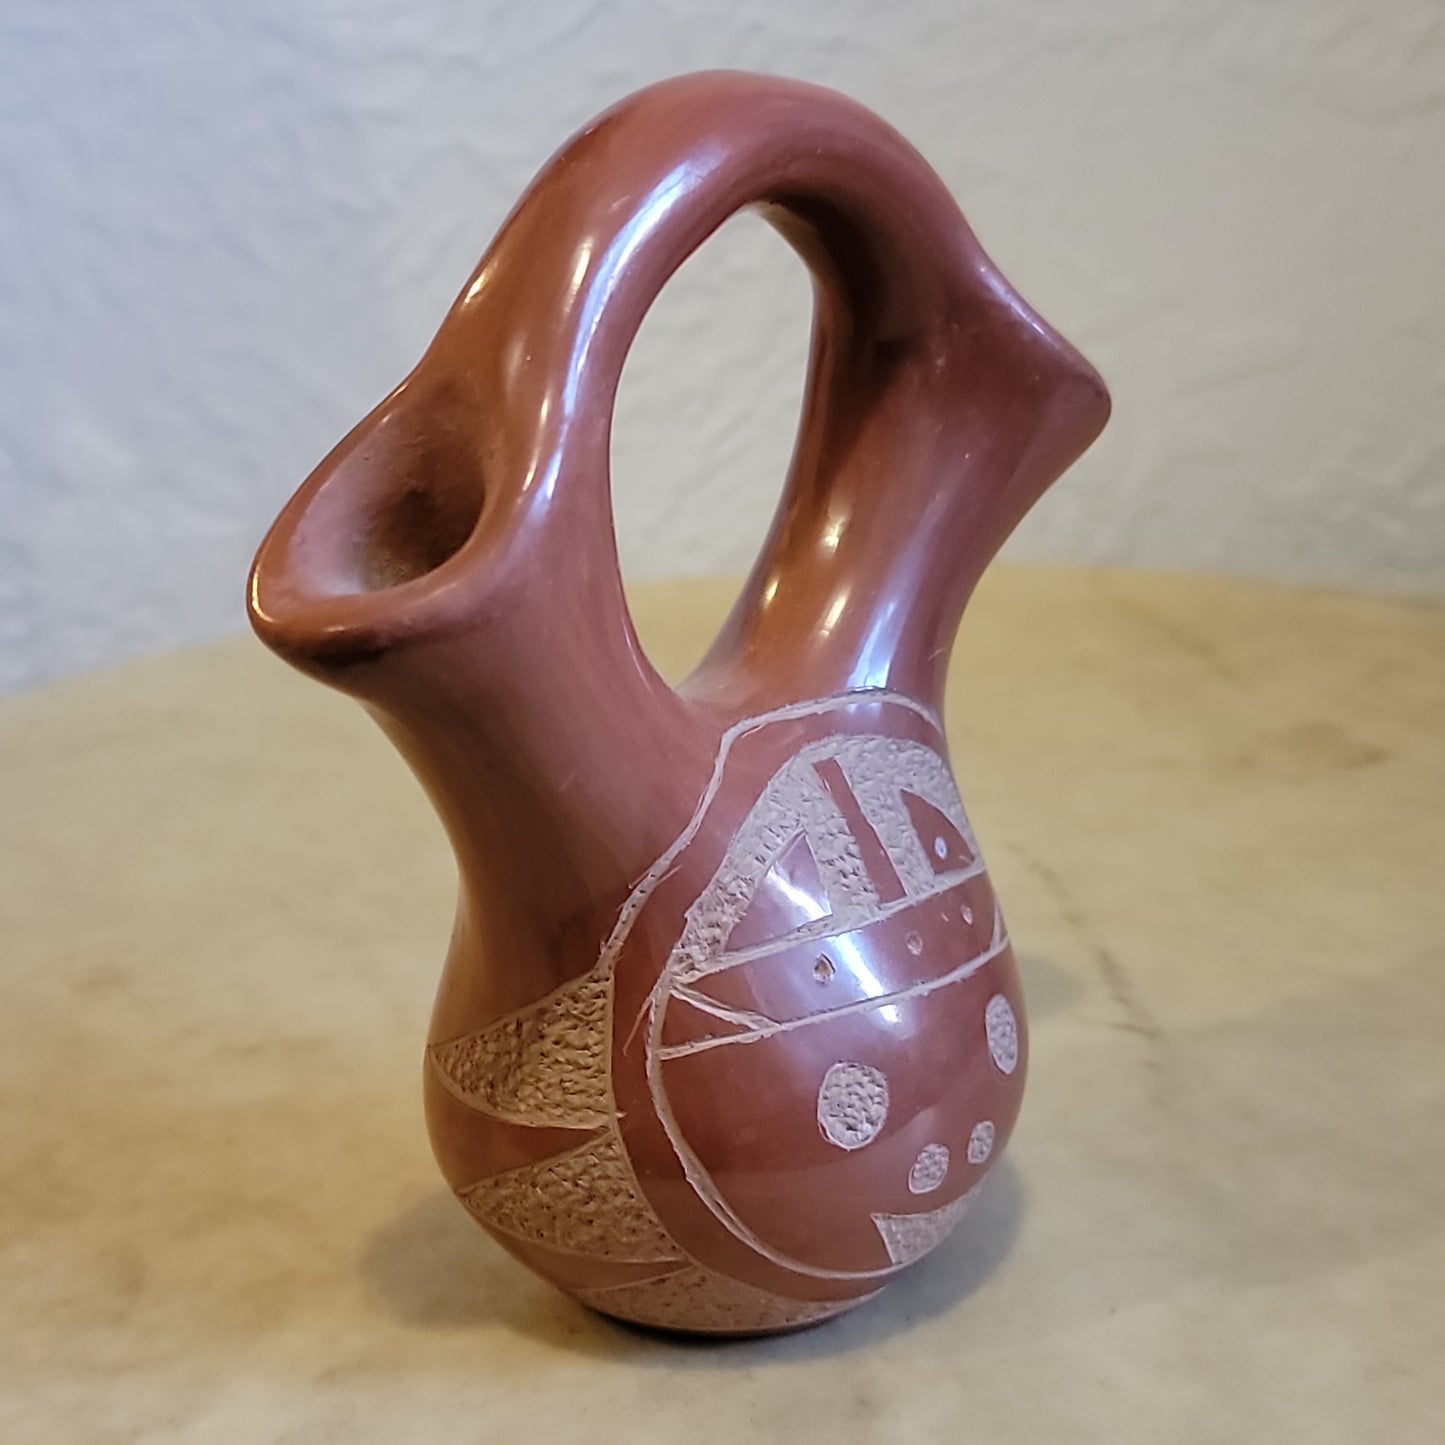 Vintage Leonidas Tapia San Juan Redware Carved Wedding Vase Pueblo Pottery